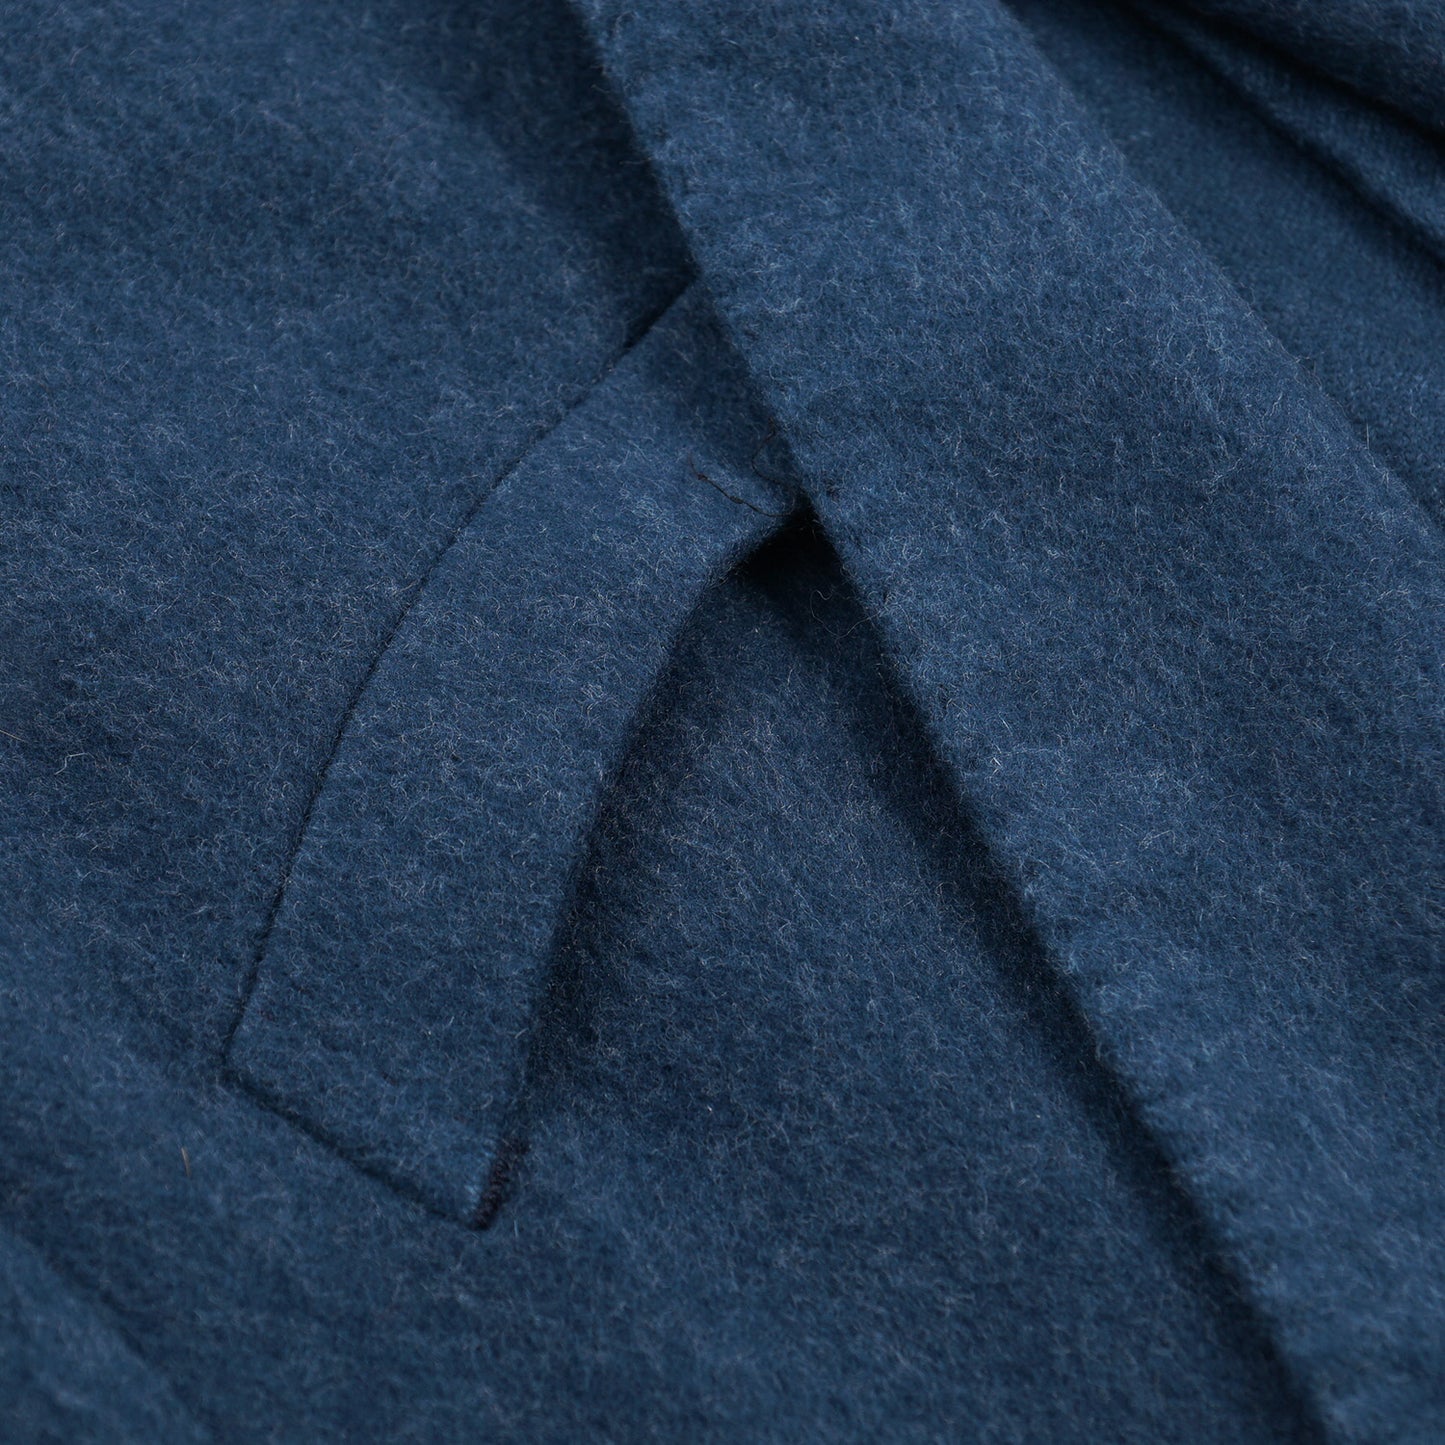 Boglioli Soft Brushed Wool 'K Jacket' Sport Coat - Top Shelf Apparel